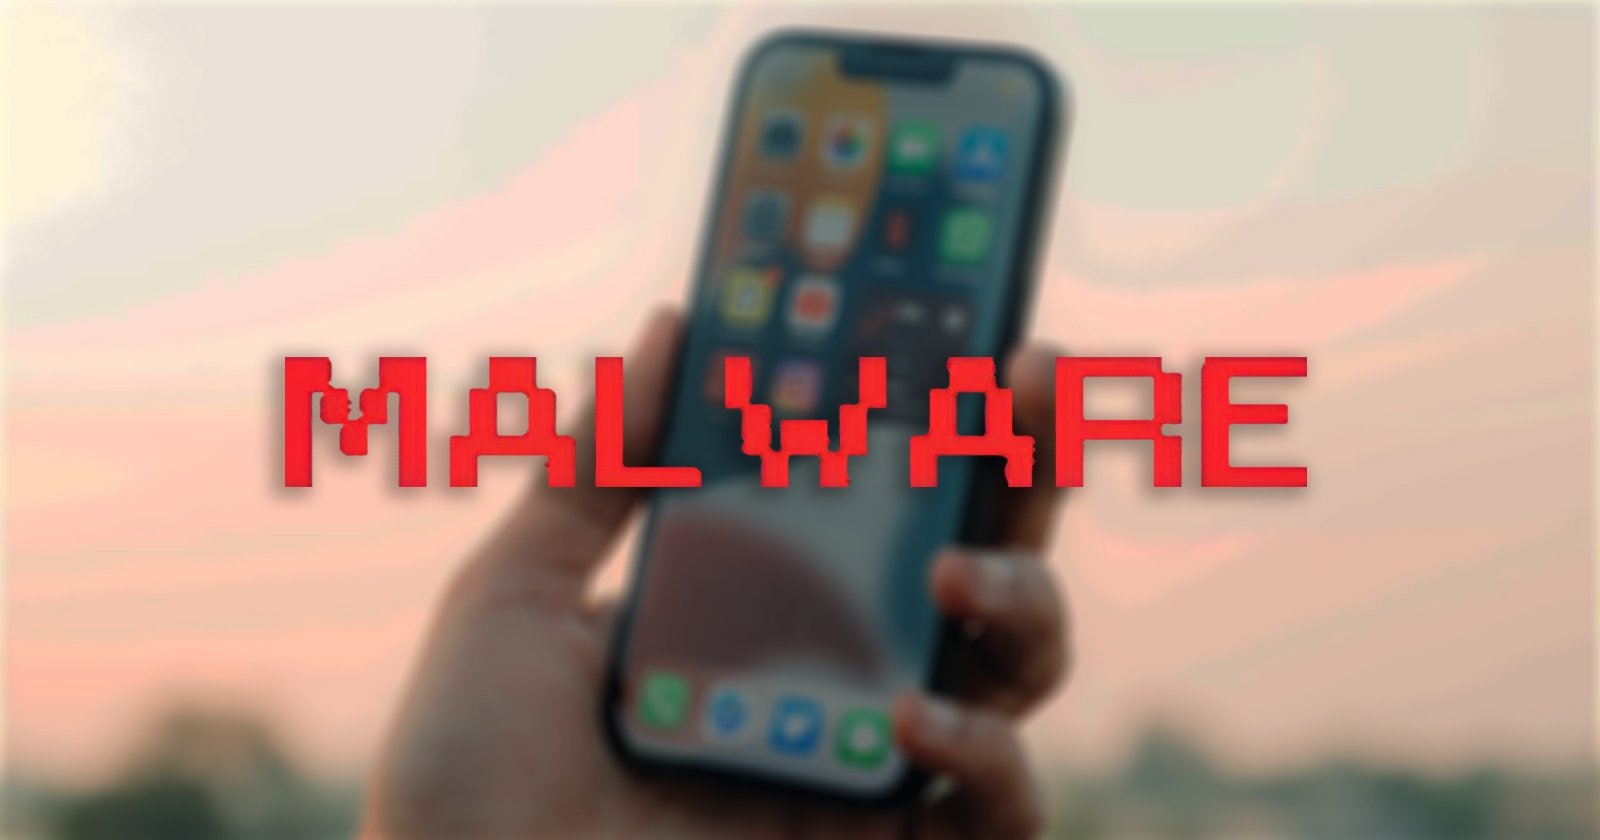 iPhone malware